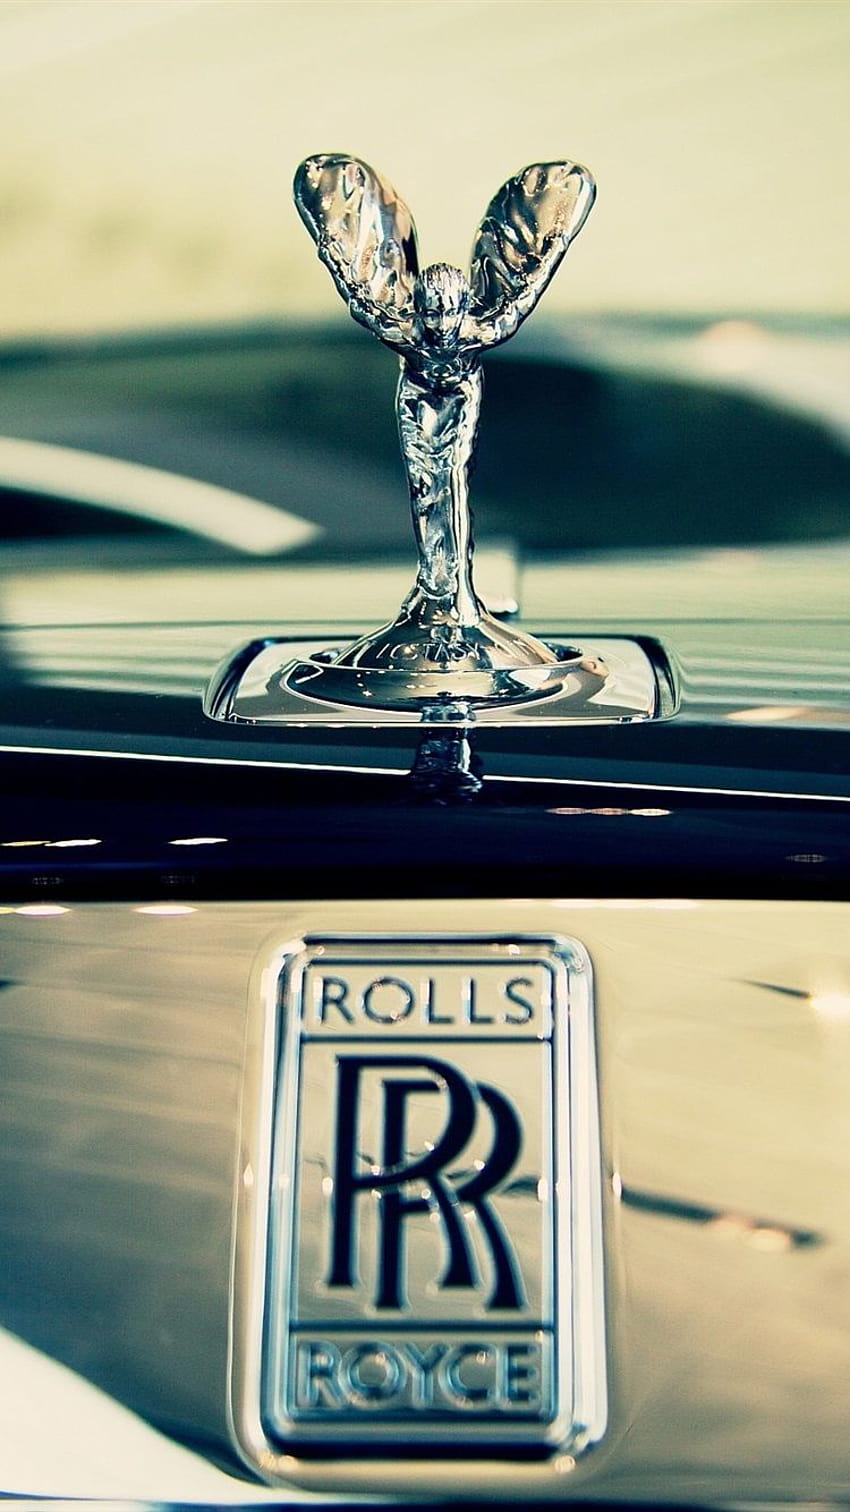 Rolls Royce Logo and Luxury Cars